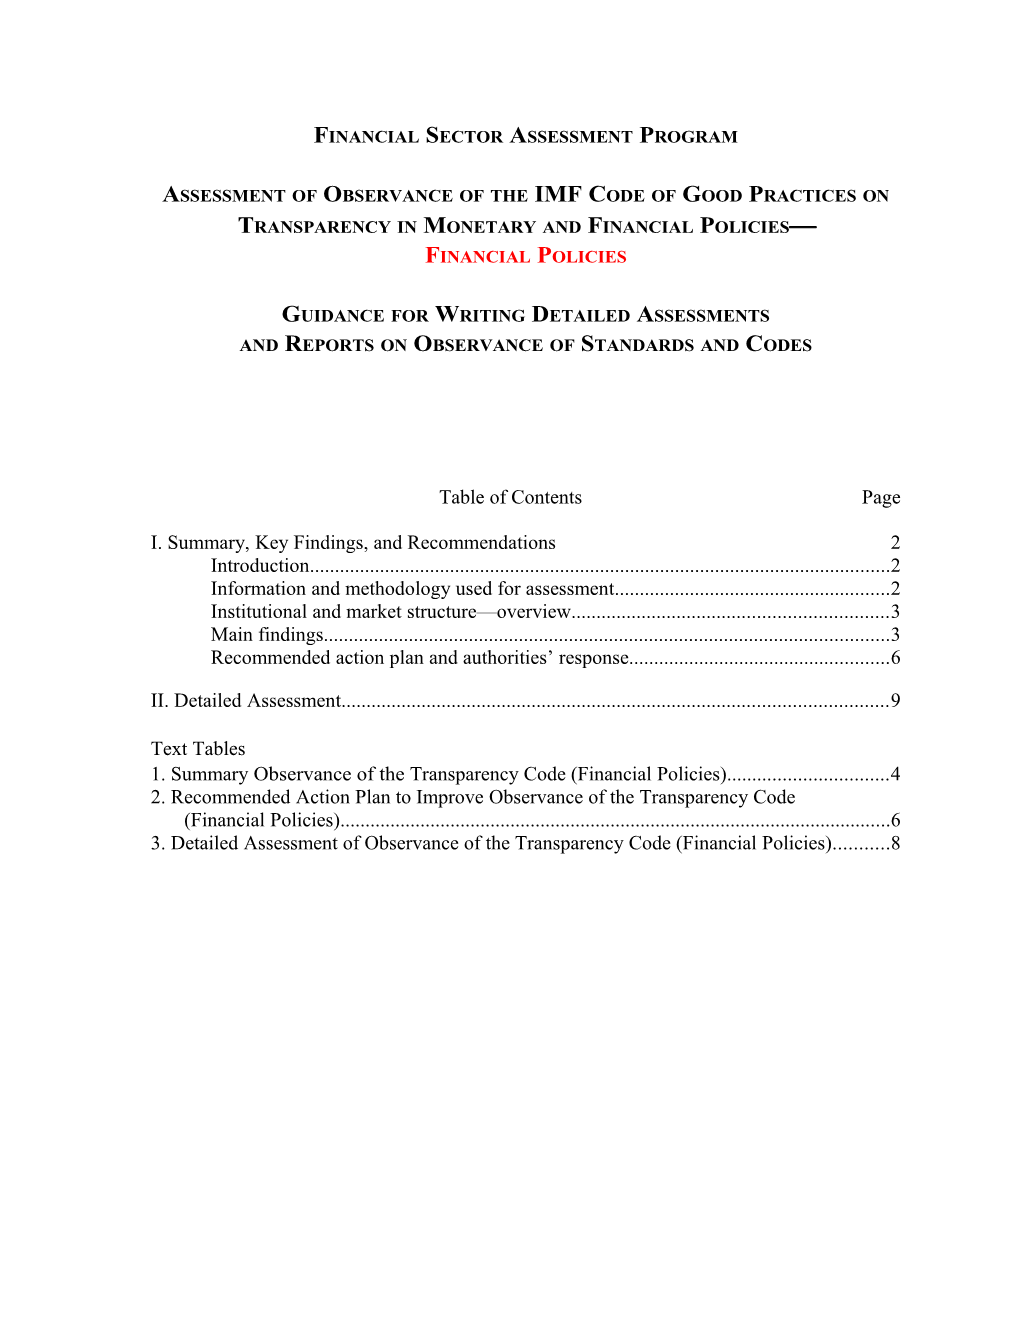 Financial Sector Assessment Program: Detailed Assessment Report on Observance of the IMF